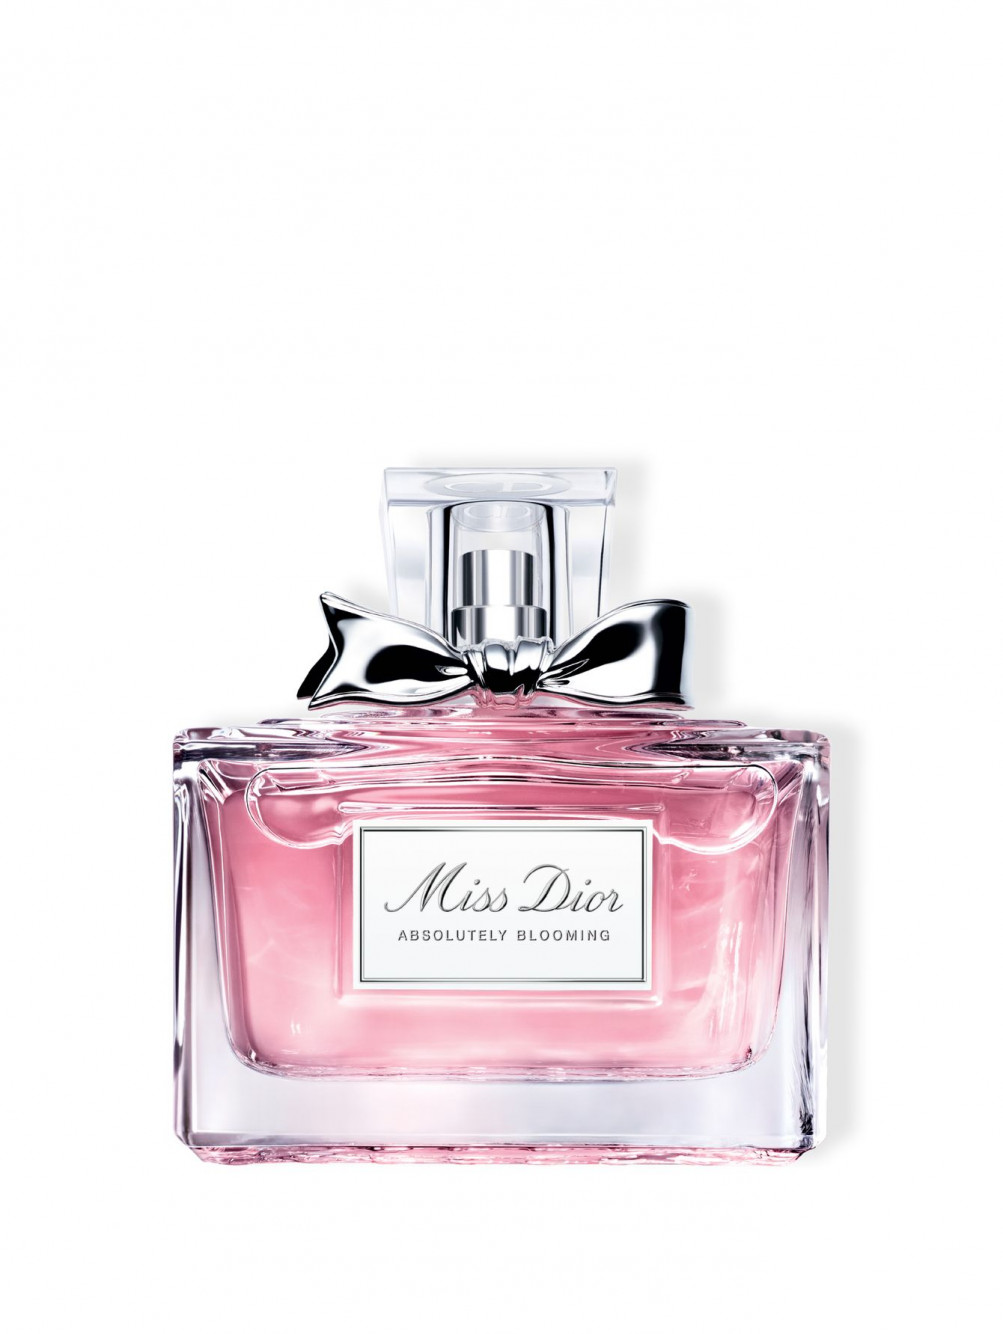 Miss Dior Absolutely Blooming Парфюмерная вода 50 мл - Общий вид